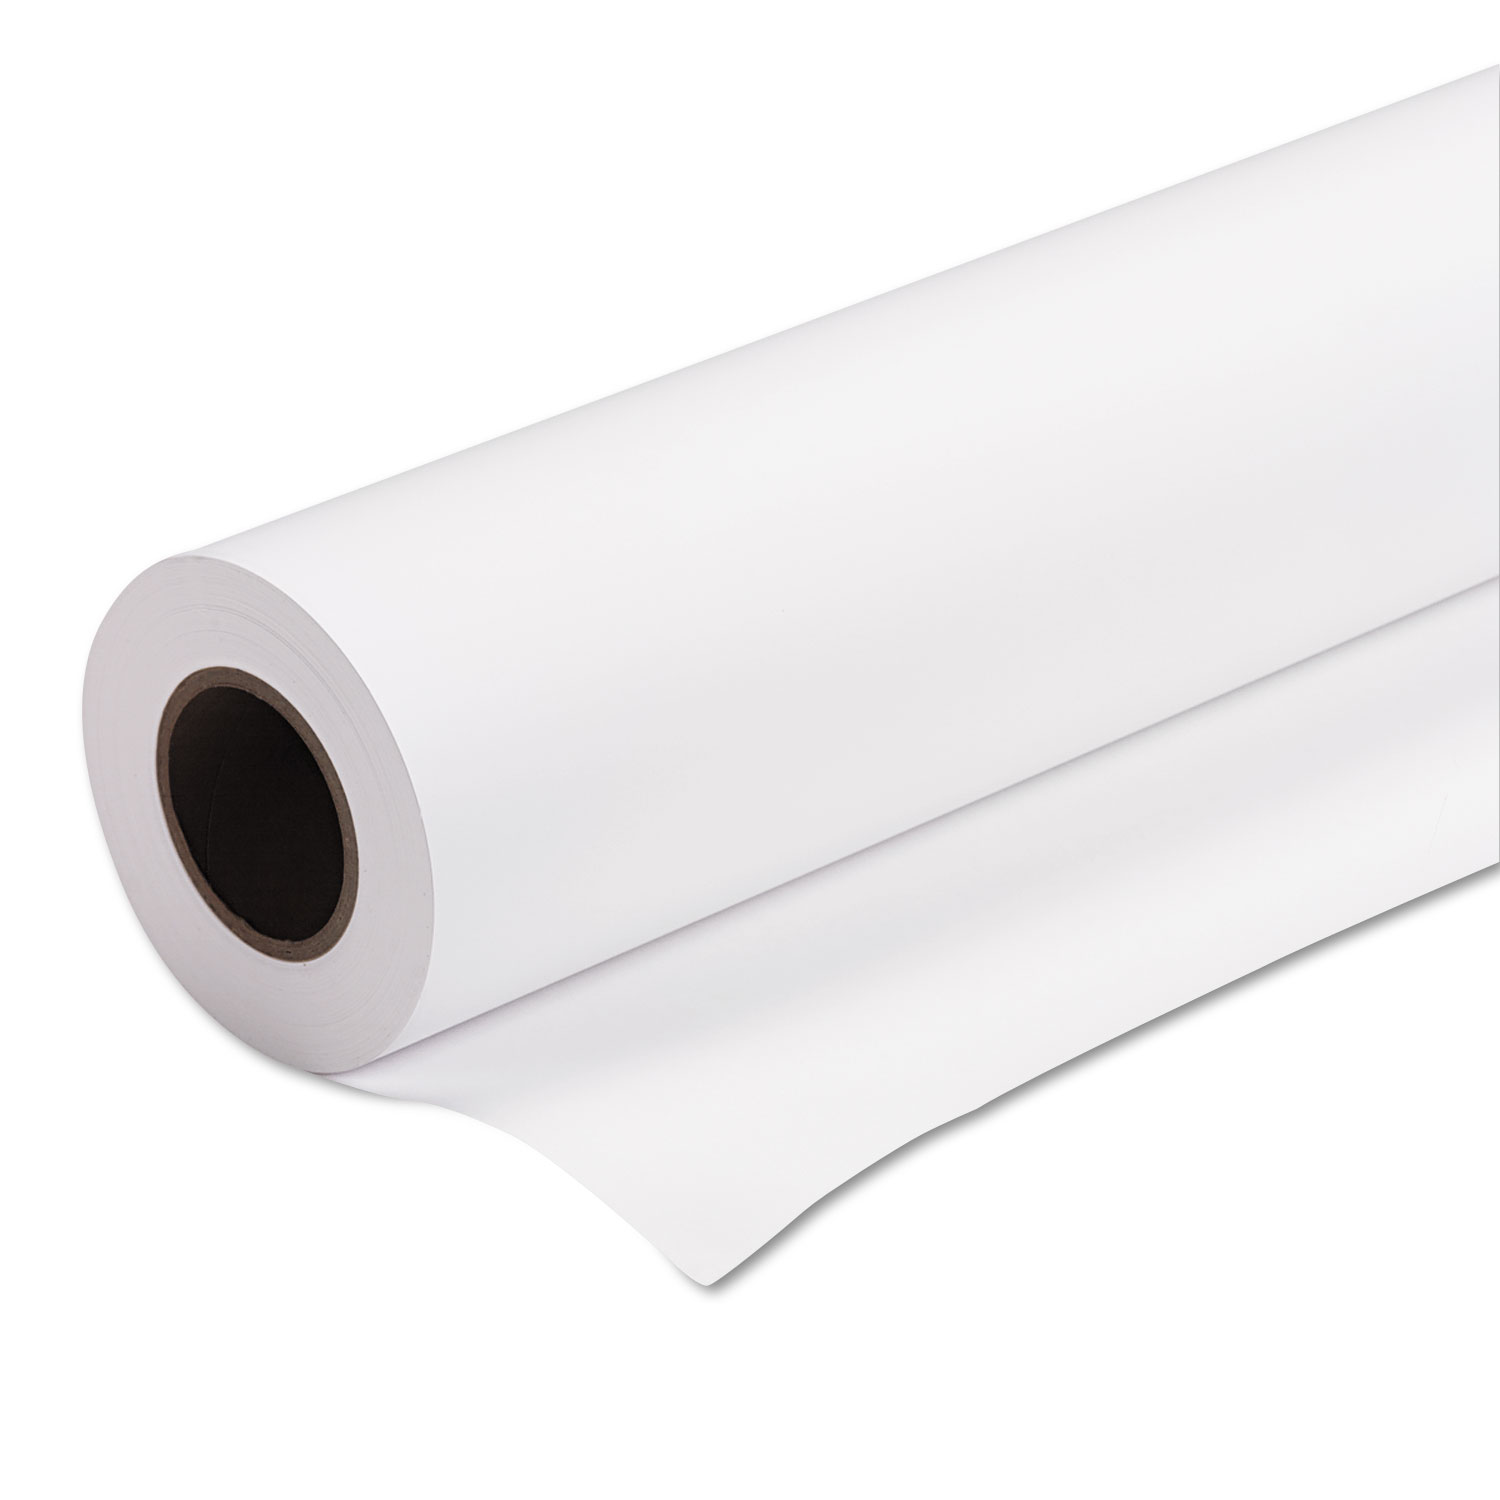  Iconex 45202 Amerigo Wide-Format Paper, 2 Core, 35 lb, 36 x 100 ft, Coated White (ICX90750216) 